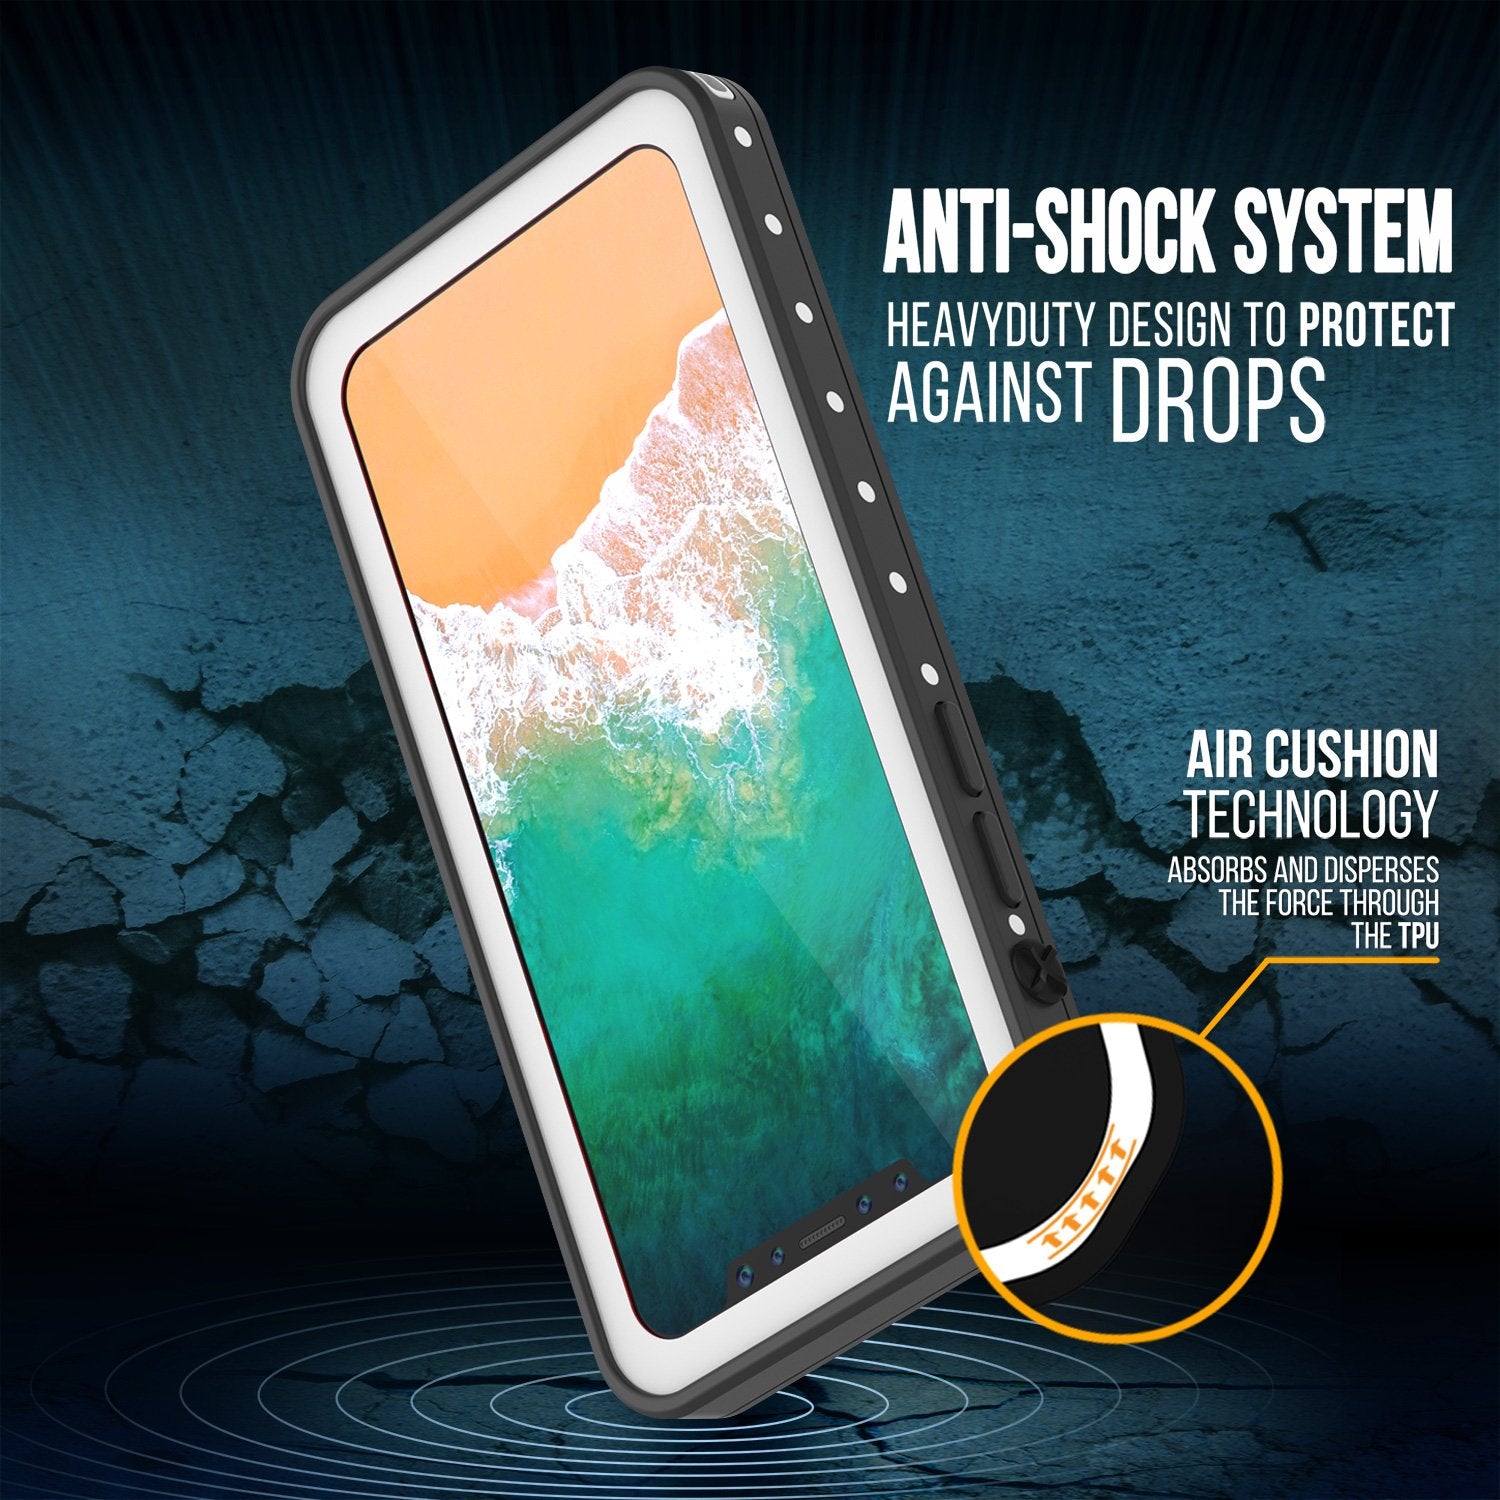 iiPhone X Plus Waterproof Case, Punkcase StudStar Series Cover [White]